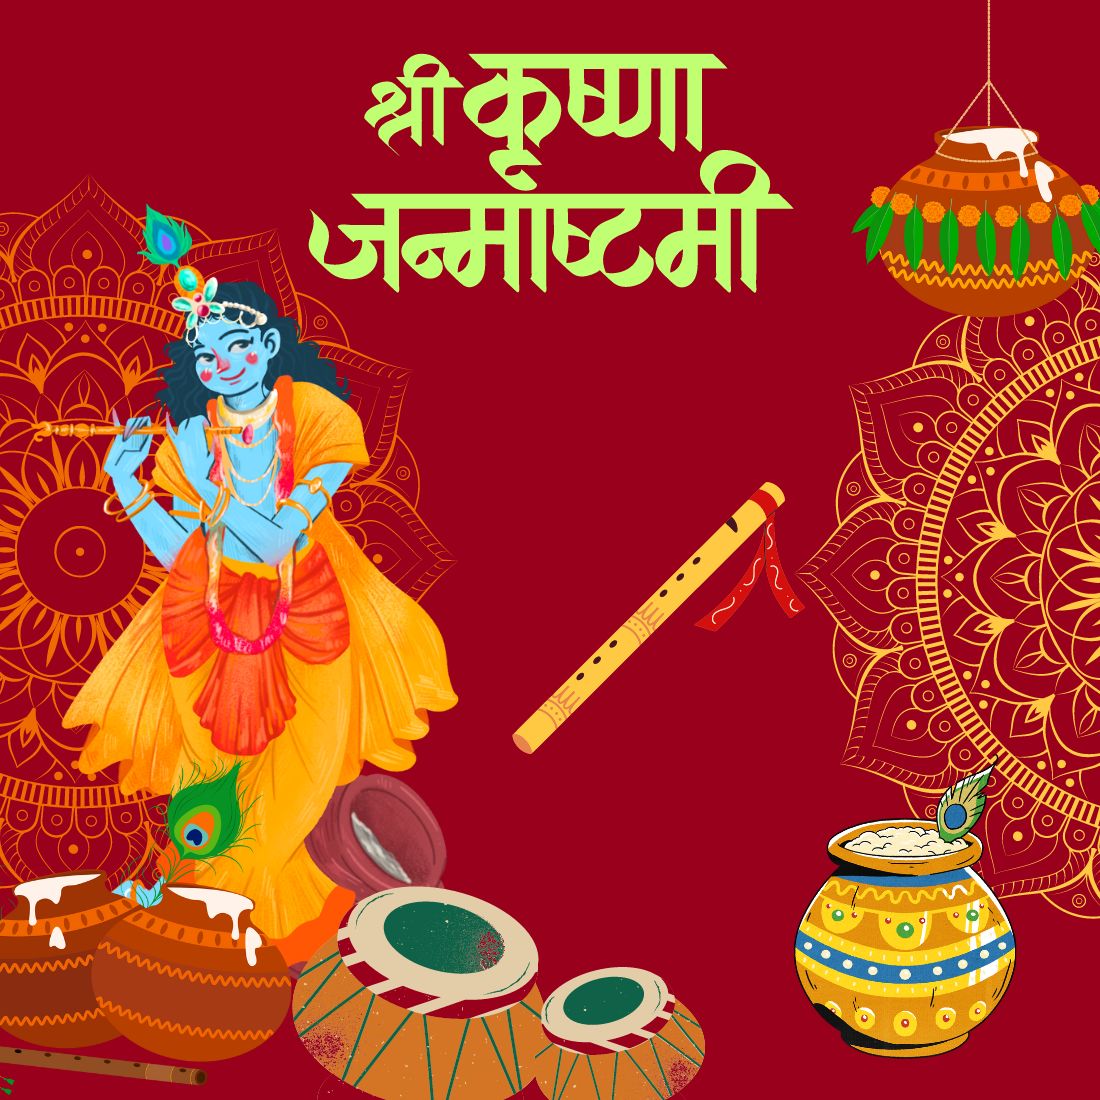 Celebrate the Divine Spirit: Happy Janmashtami Design cover image.